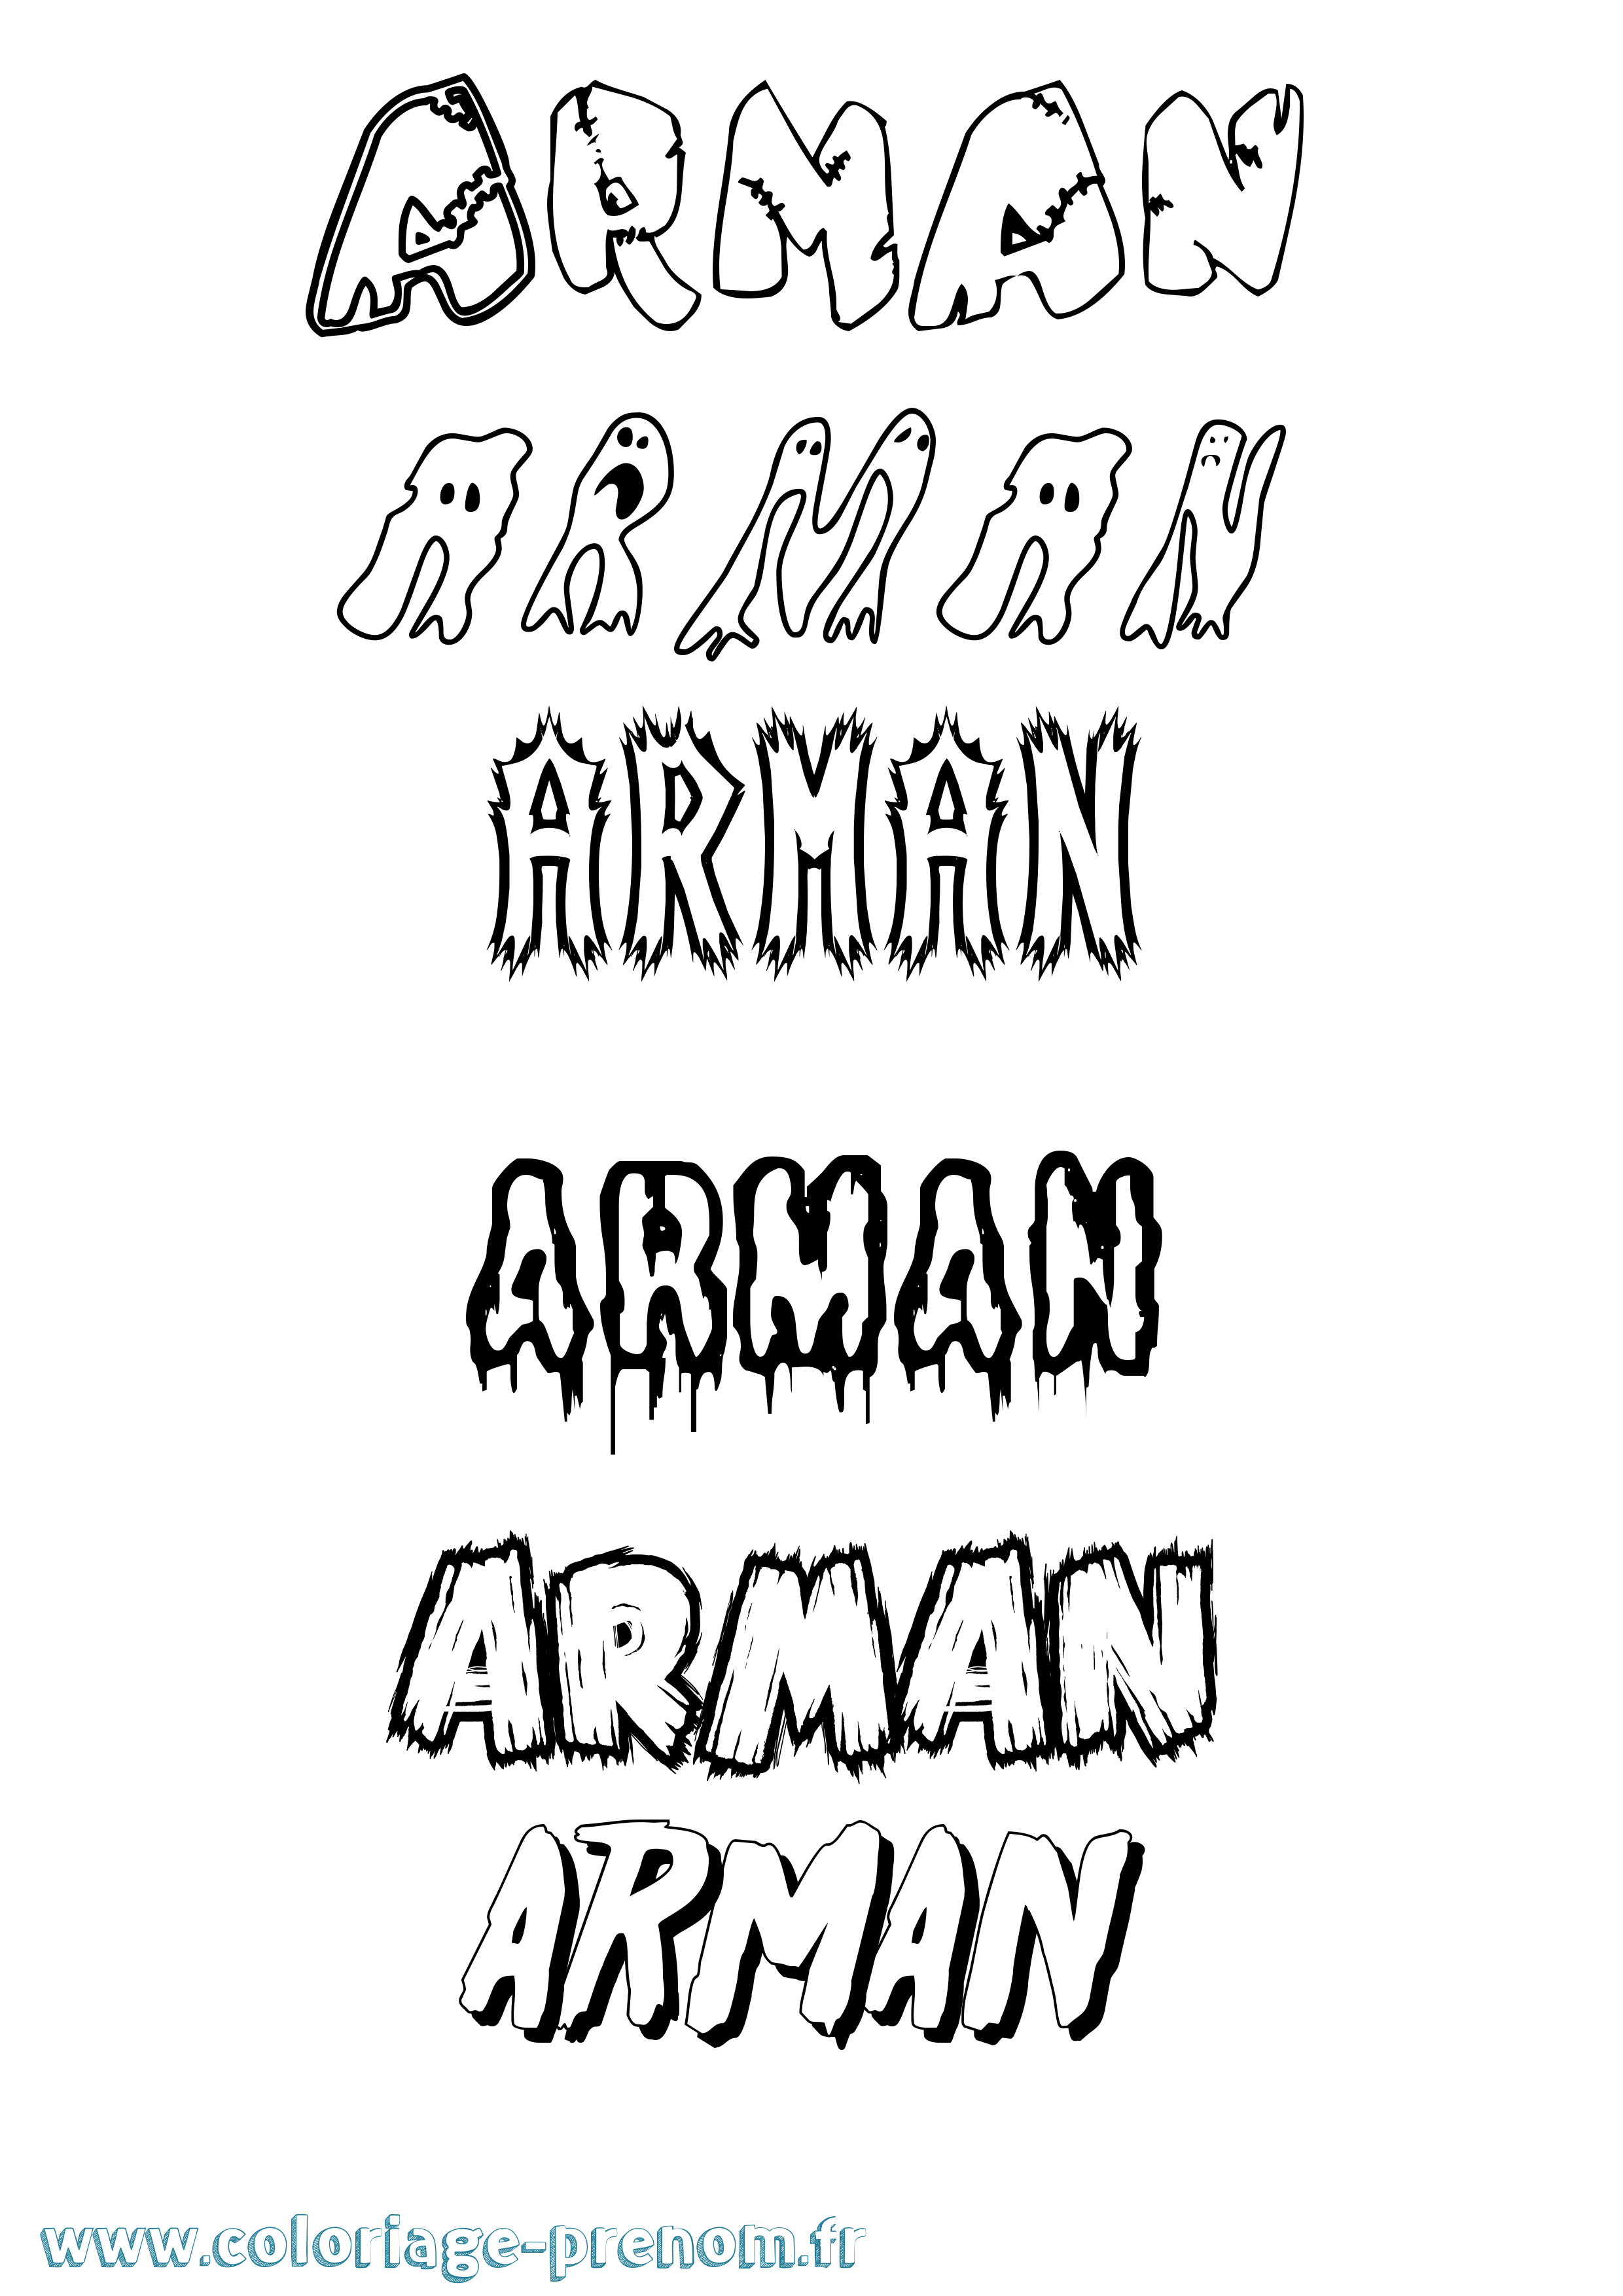 Coloriage prénom Arman Frisson